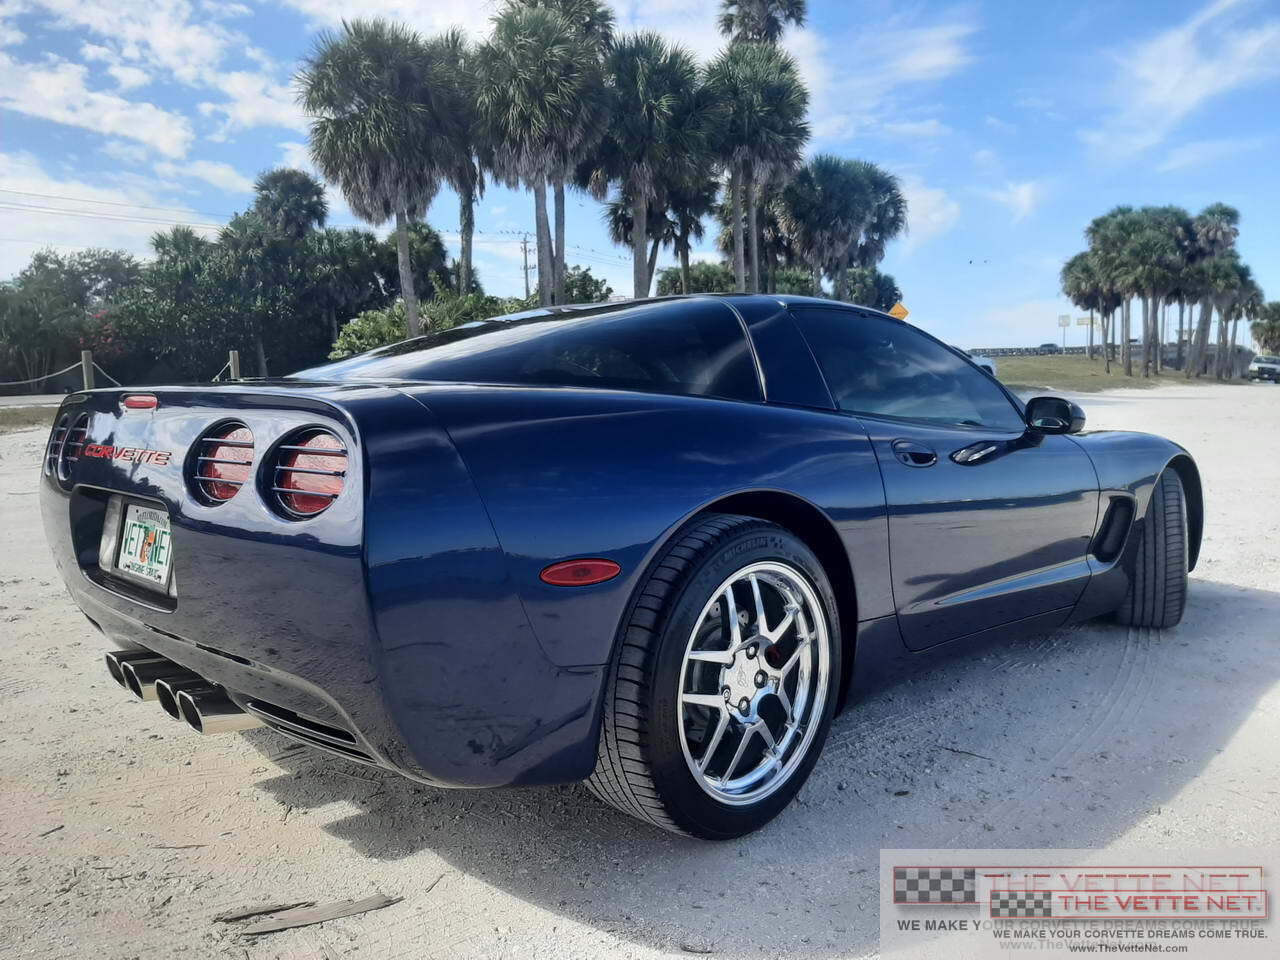 1999 Corvette Coupe Navy Blue Metallic